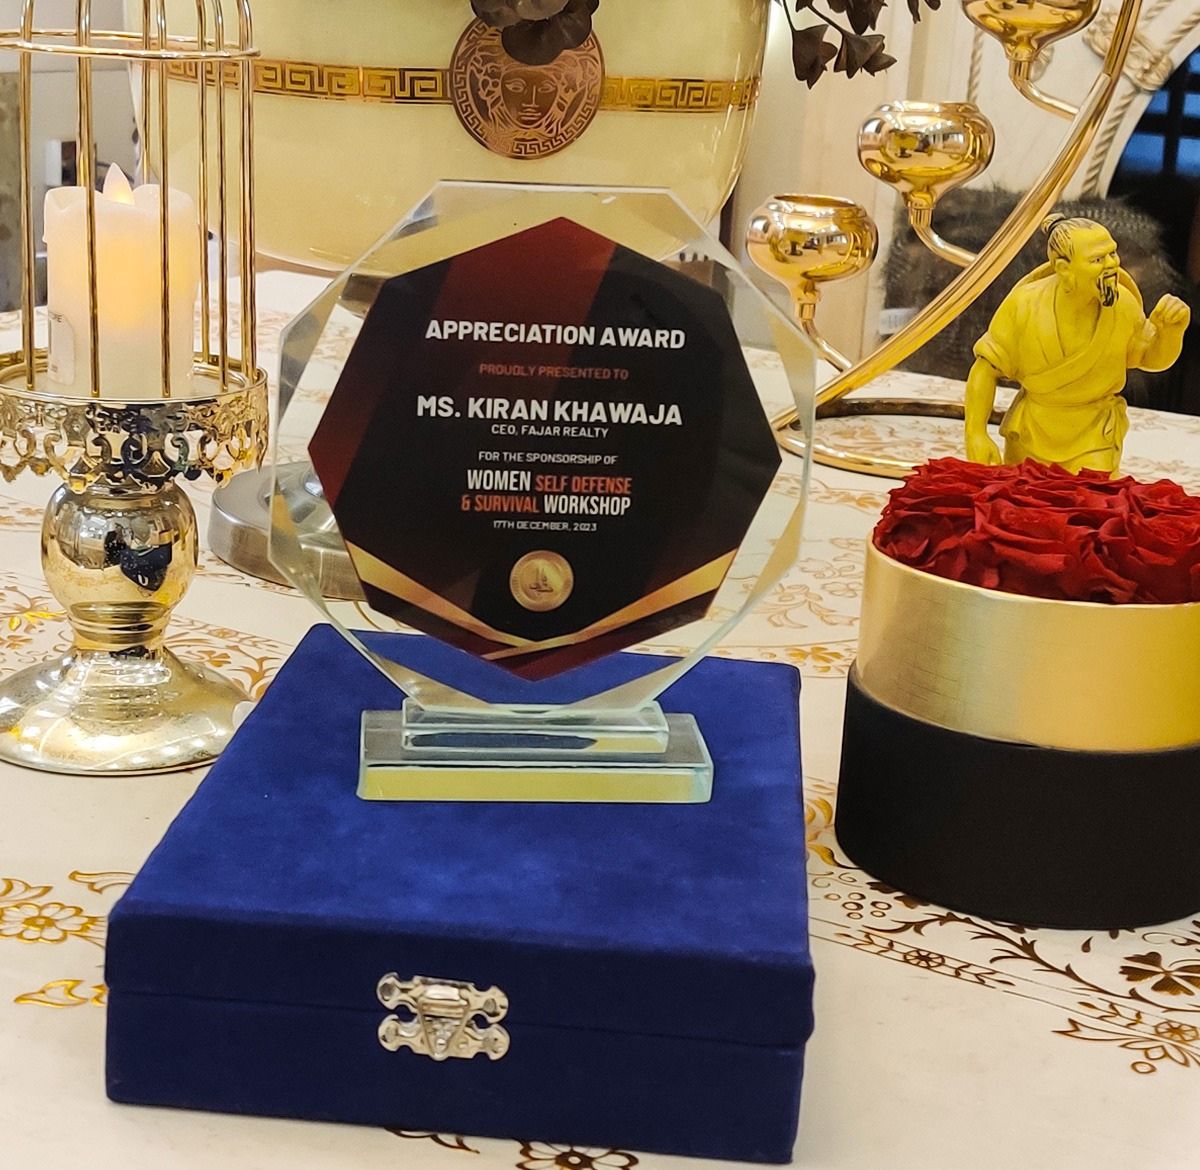 Appreciation Award from Pasbaan